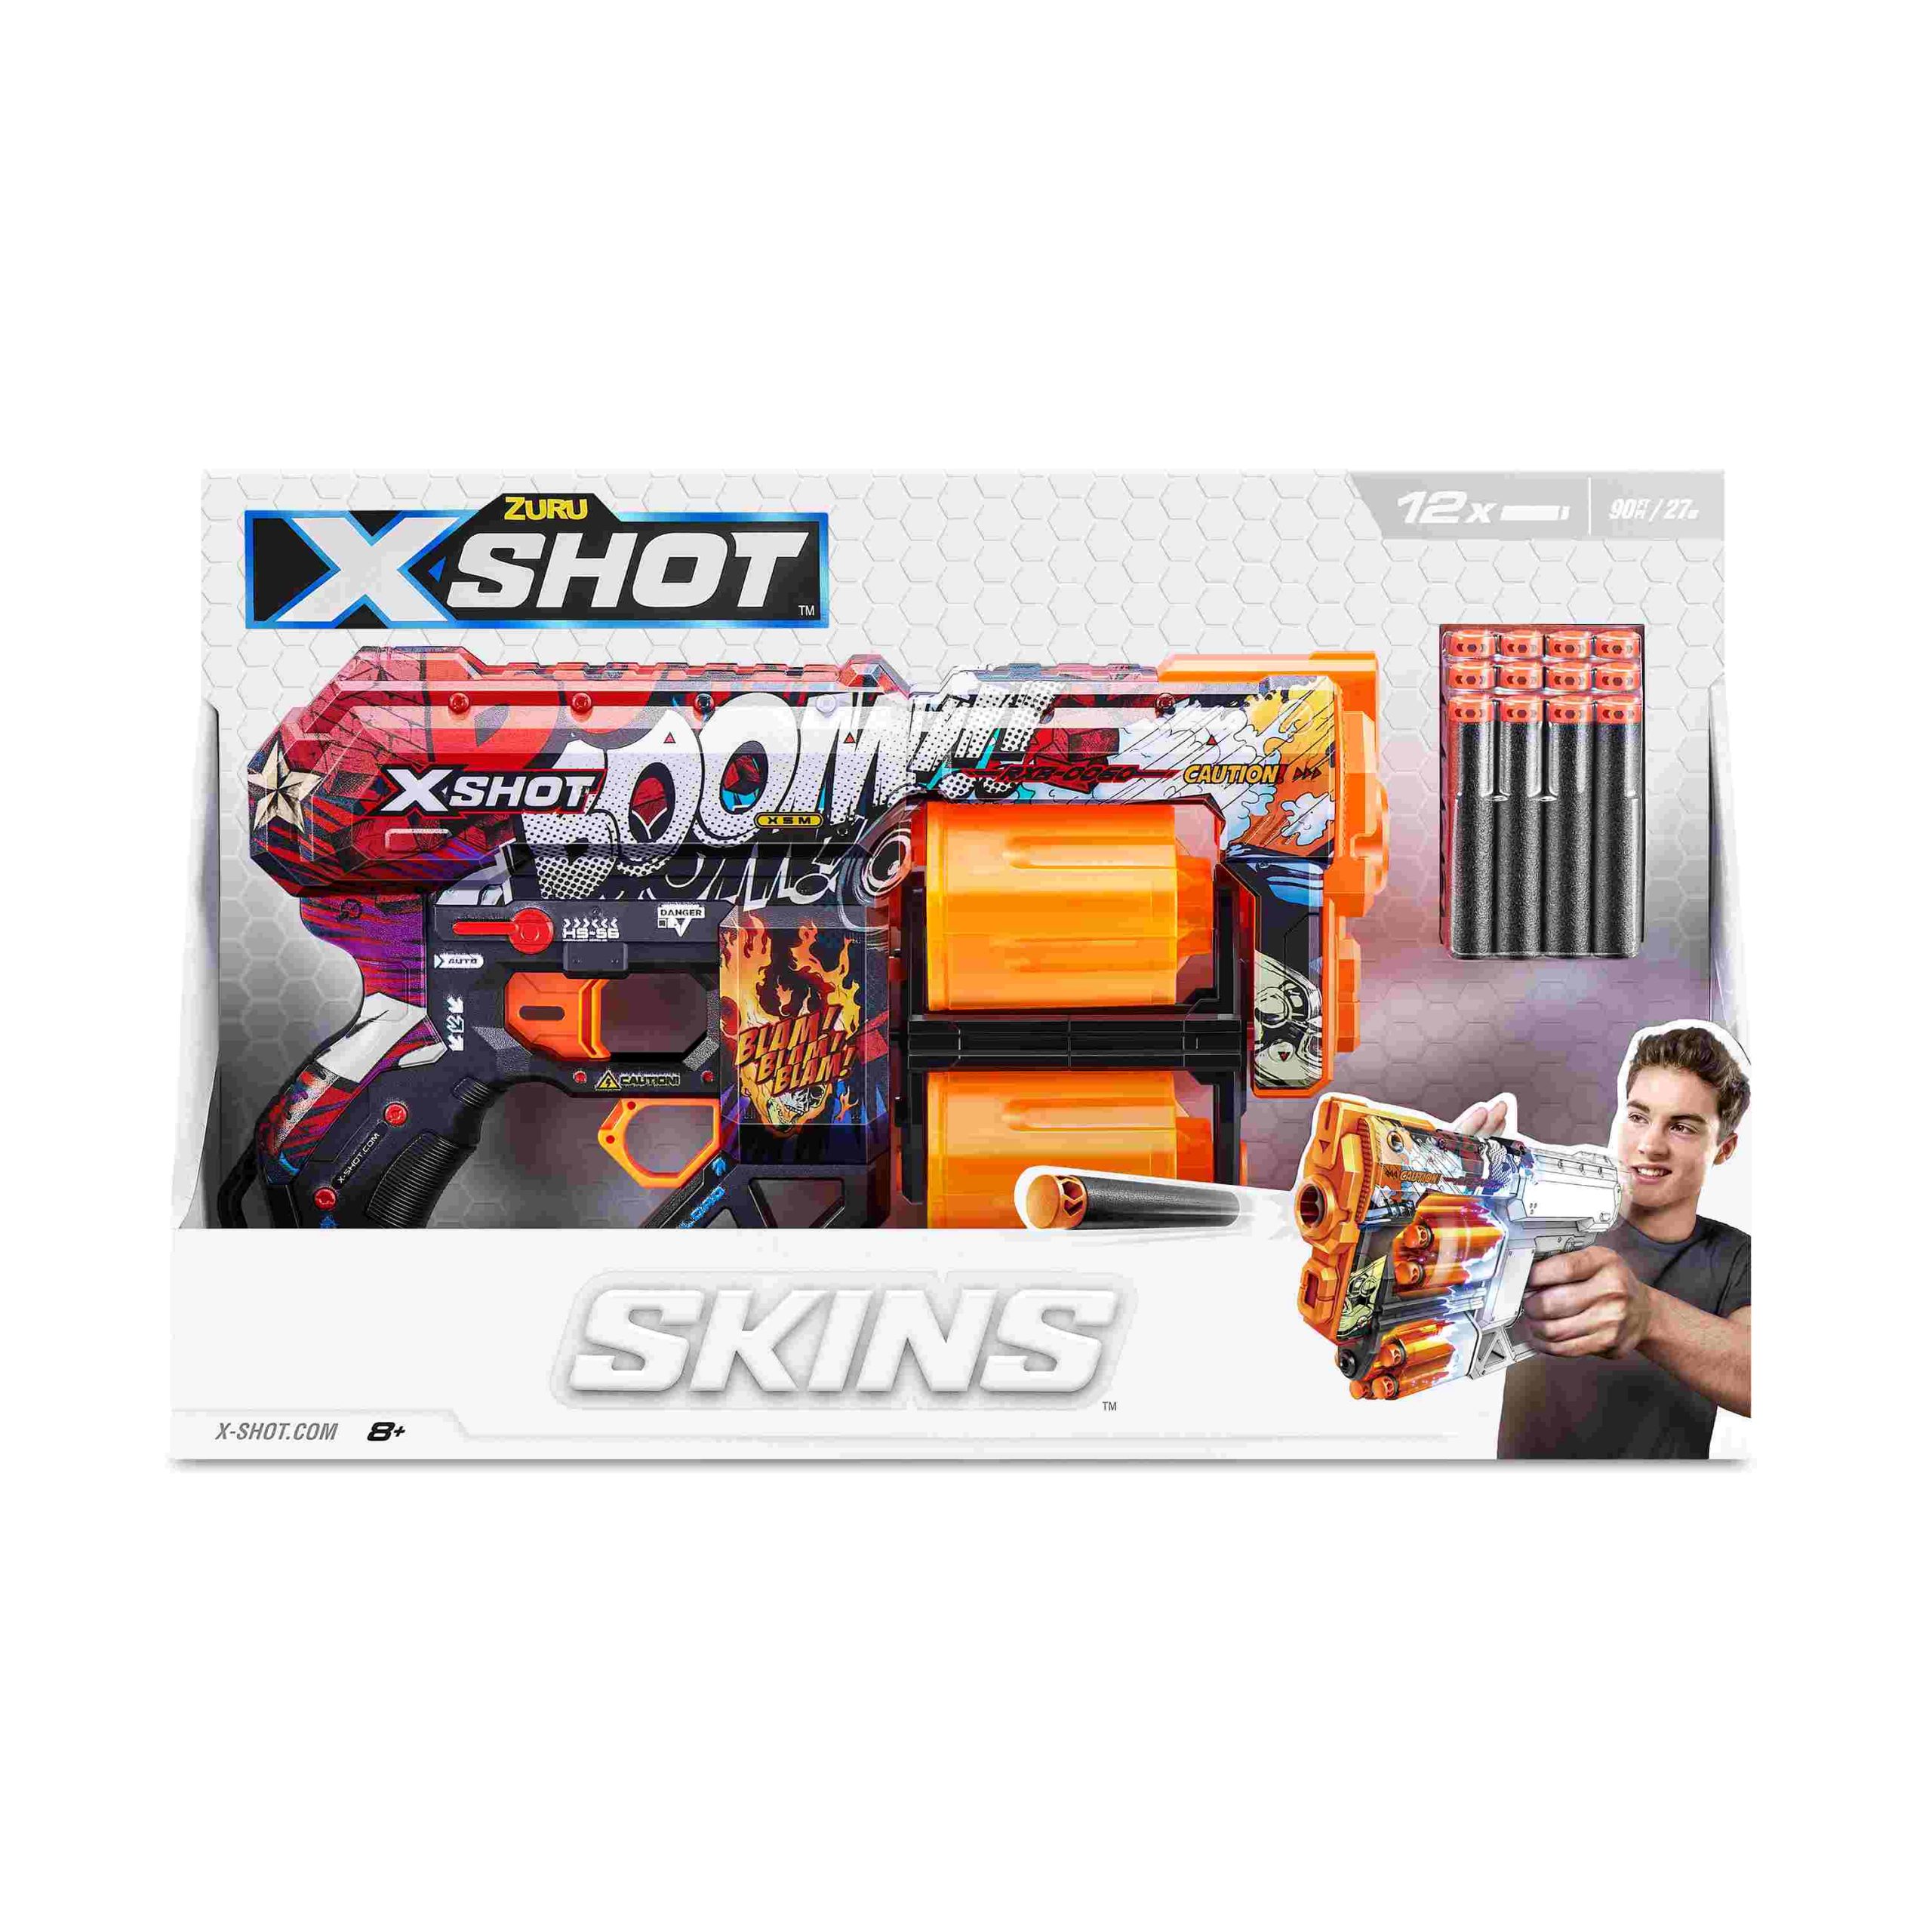 Xshot skins dread boom - SUN&SPORT ORIG, X-SHOT